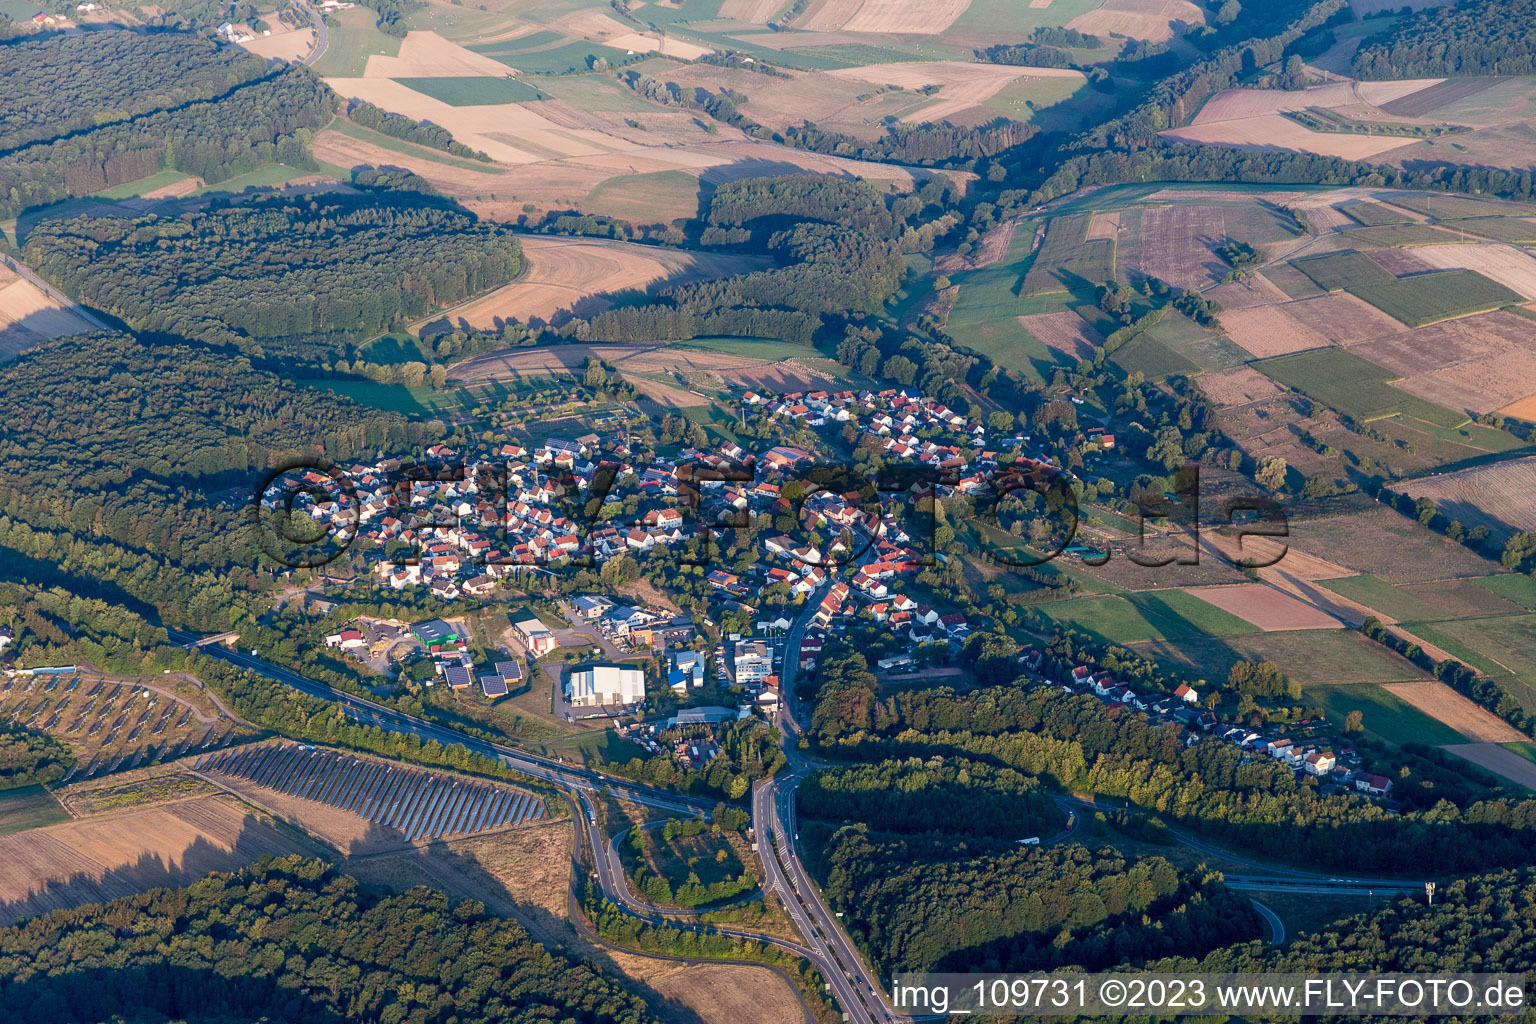 Aerial view of Petersberg in the state Rhineland-Palatinate, Germany